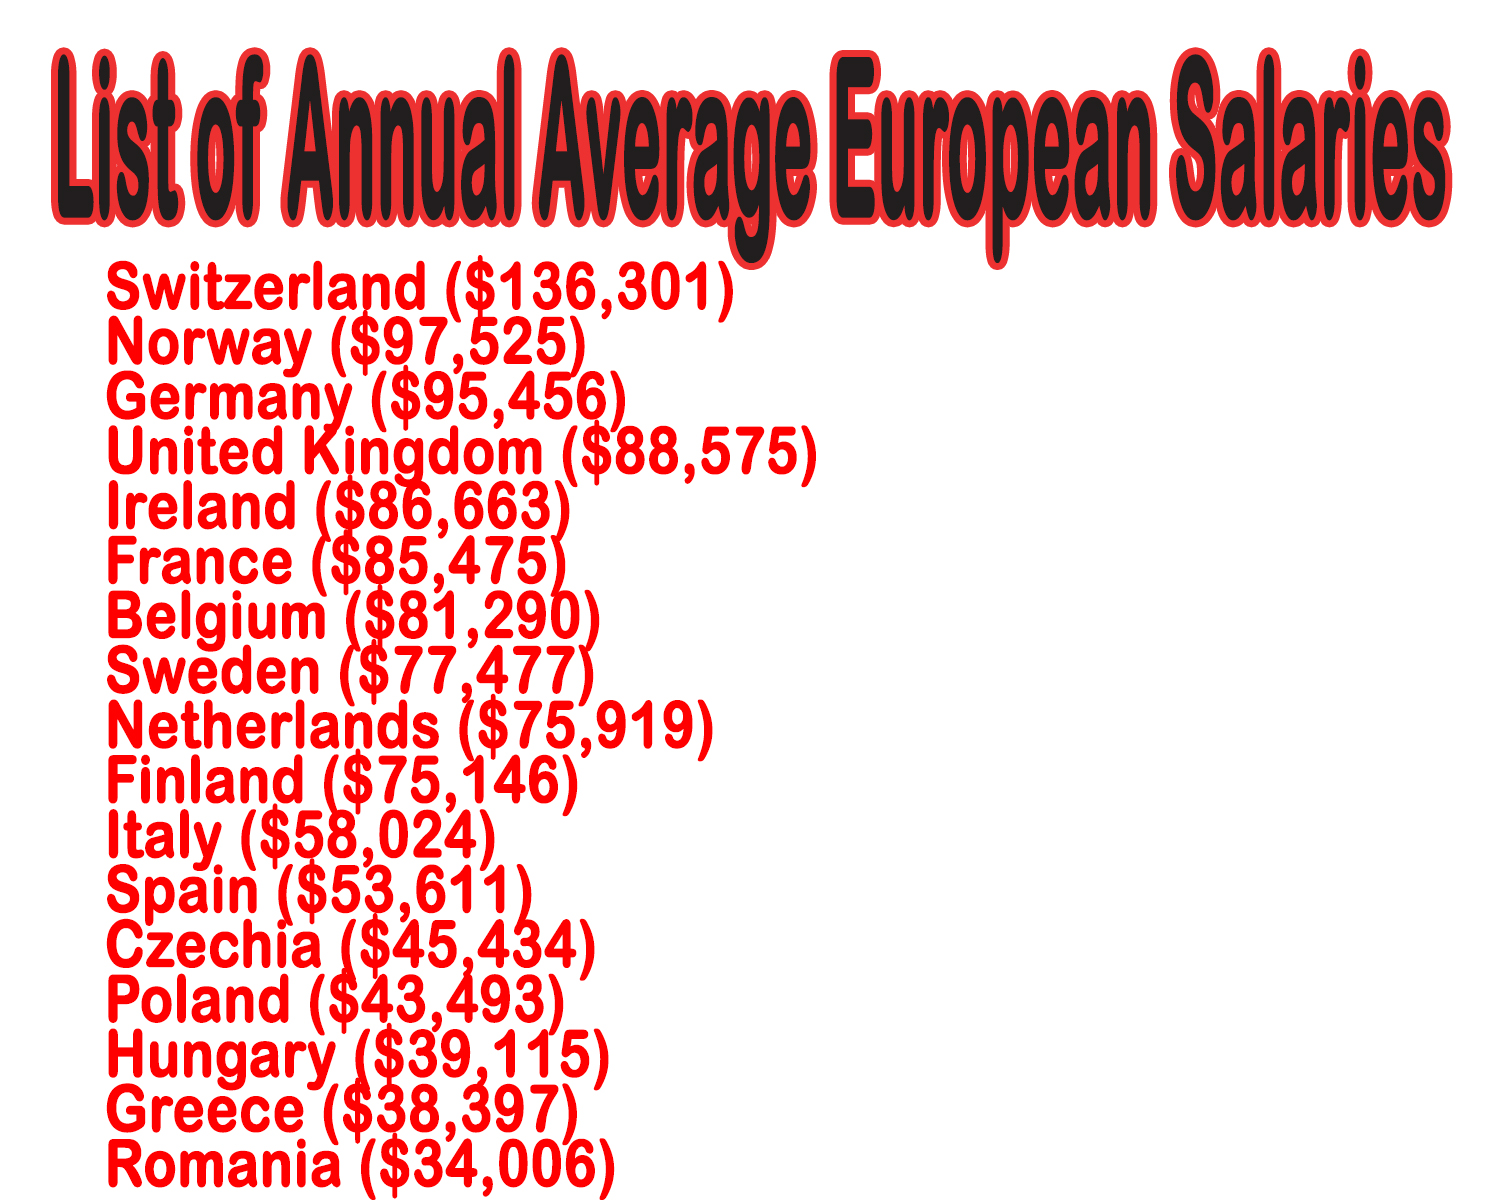 Switzerland ($136,301) Norway ($97,525) Germany ($95,456) United Kingdom ($88,575) Ireland ($86,663) France ($85,475) Belgium ($81,290) Sweden ($77,477) Netherlands ($75,919) Finland ($75,146) Italy ($58,024) Spain ($53,611) Czechia ($45,434) Poland ($43,493) Hungary ($39,115) Greece ($38,397) Romania ($34,006)